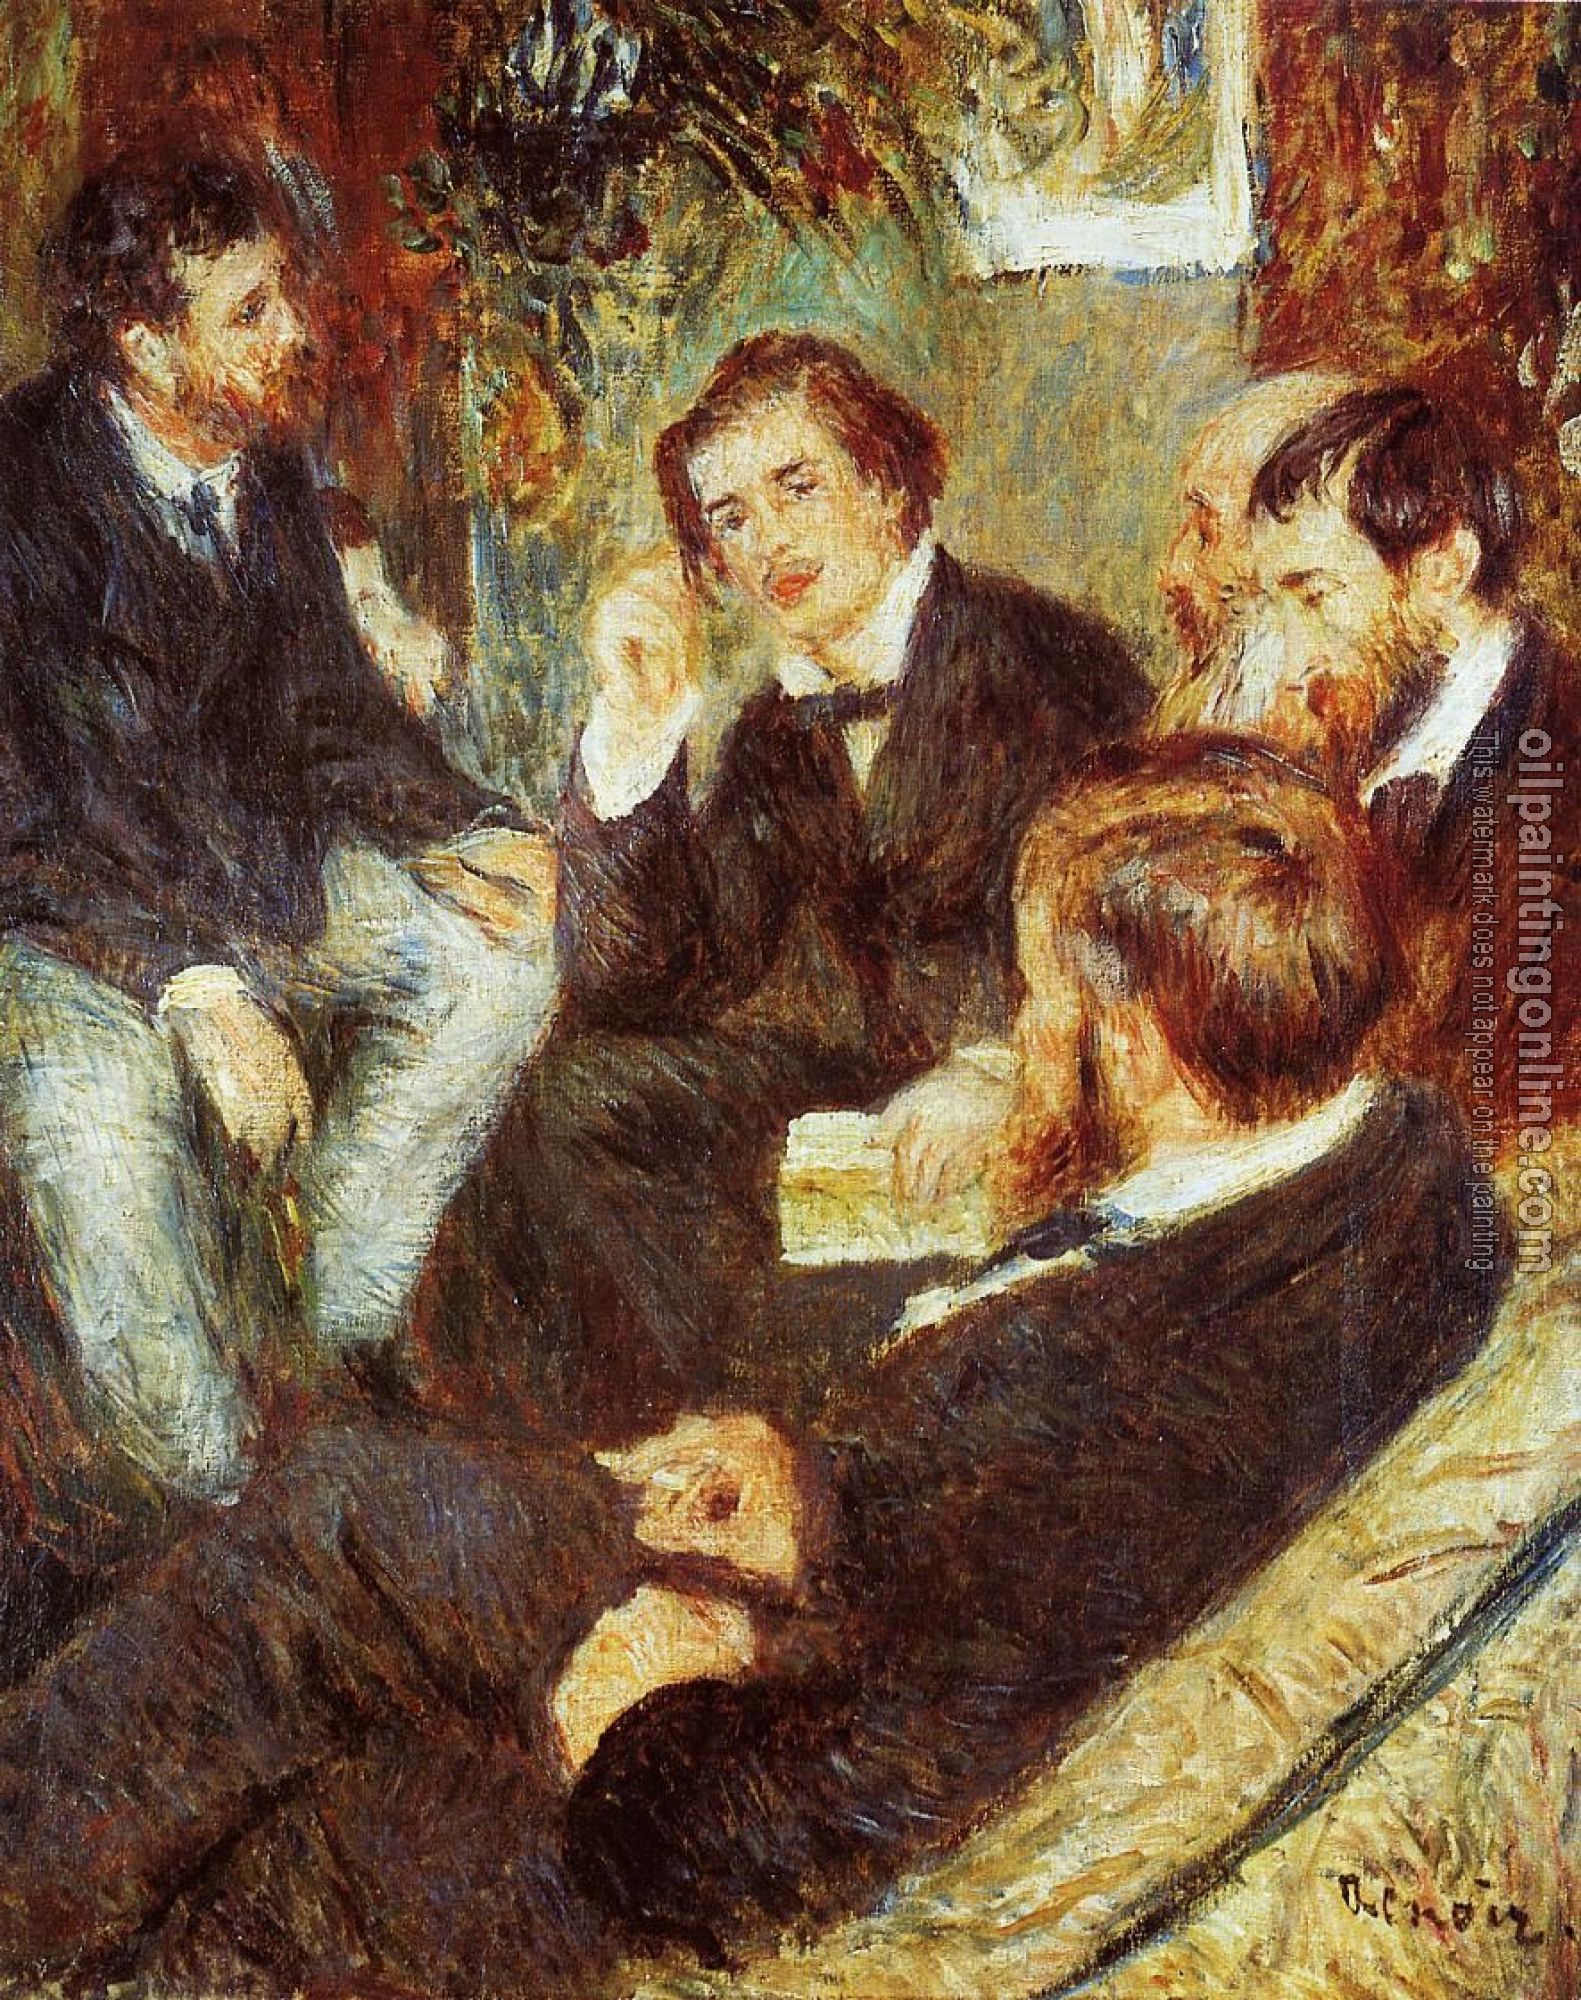 Renoir, Pierre Auguste - The Artist's Studio, Rue Saint-Georges